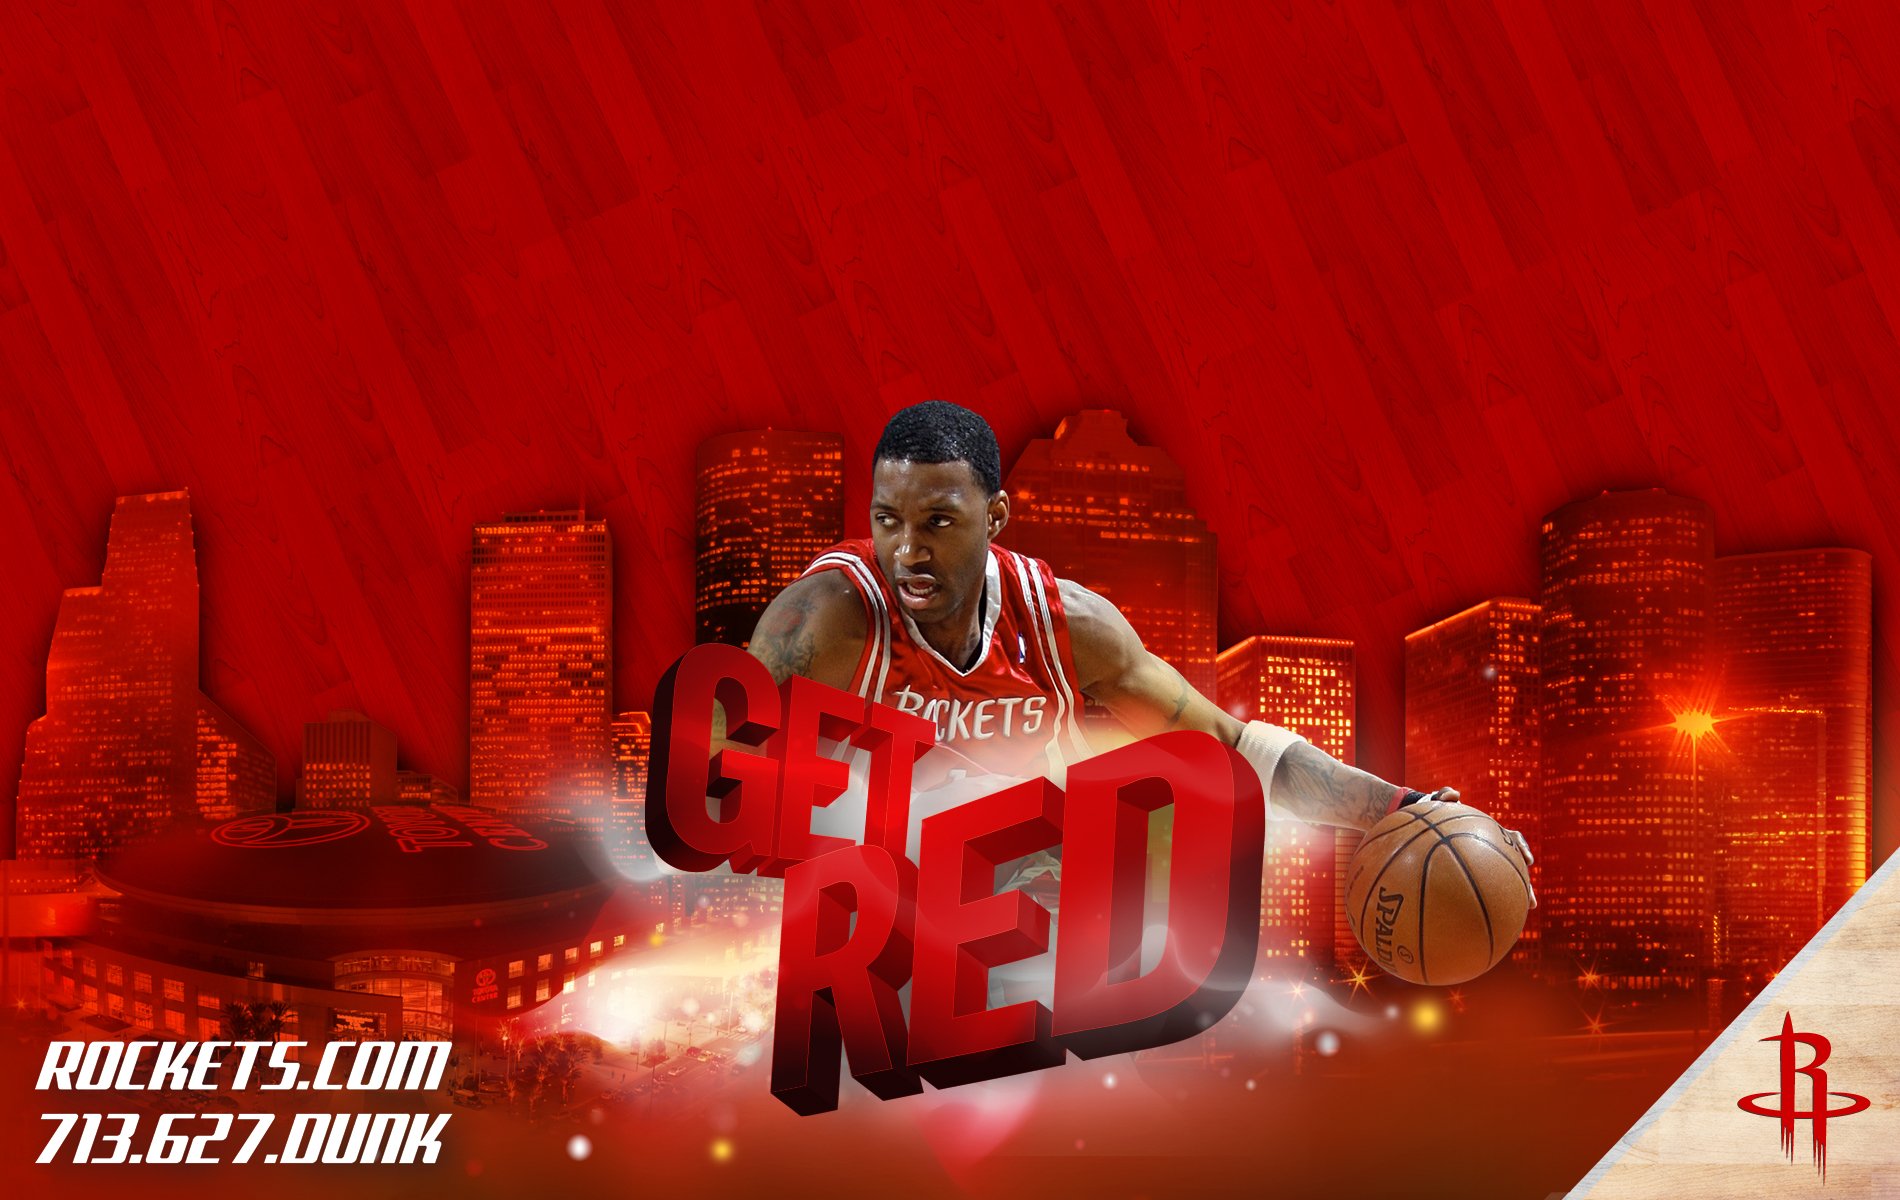 NBA Houston Rockets 2009 playoffs wallaper NBA Houston Rockets 2009